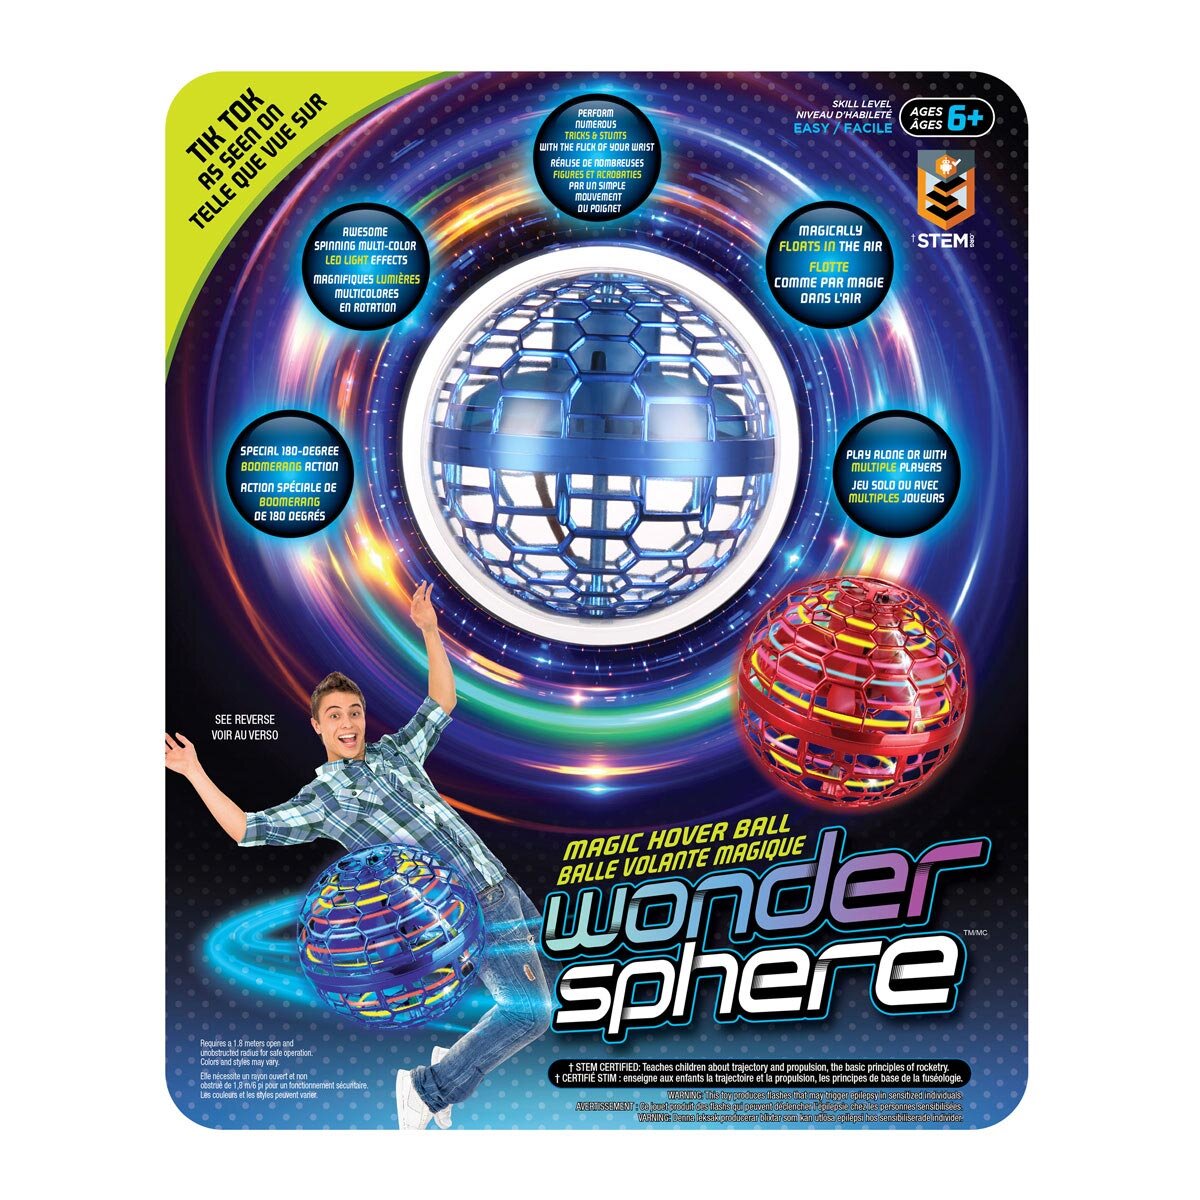 Buy Wonder Sphere Blue Box Image at Costco.co.uk